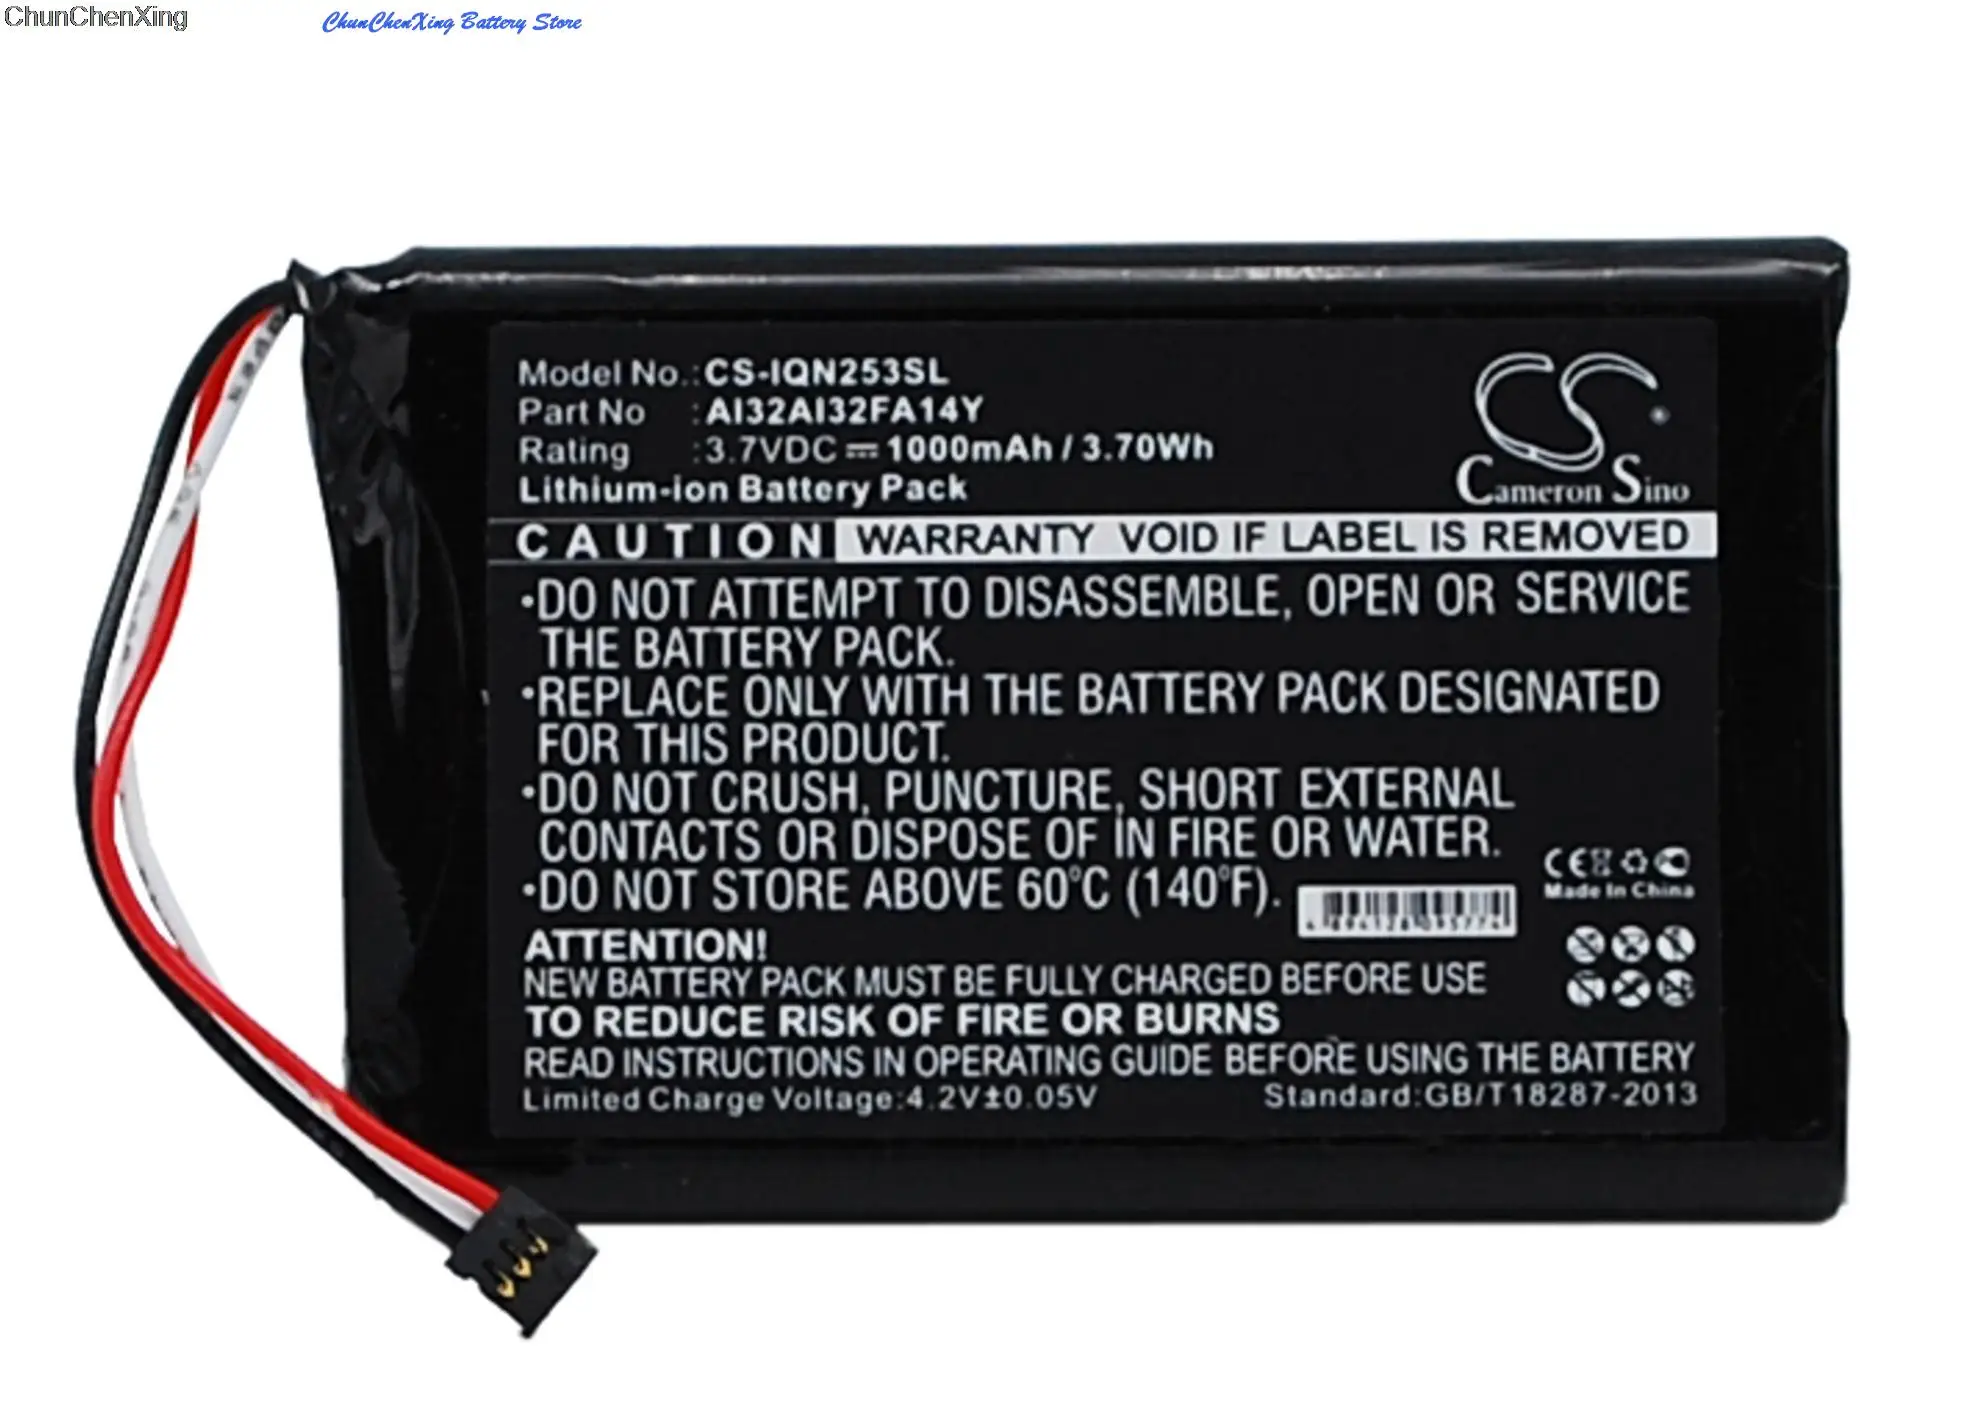 

1000mAh Battery for Garmin Nuvi 2539LM, 2539LMT 5-inch,2559LM, 2559LMT 5-inch, 2589LMT, 2589LMT 5-inch, 2597LMT